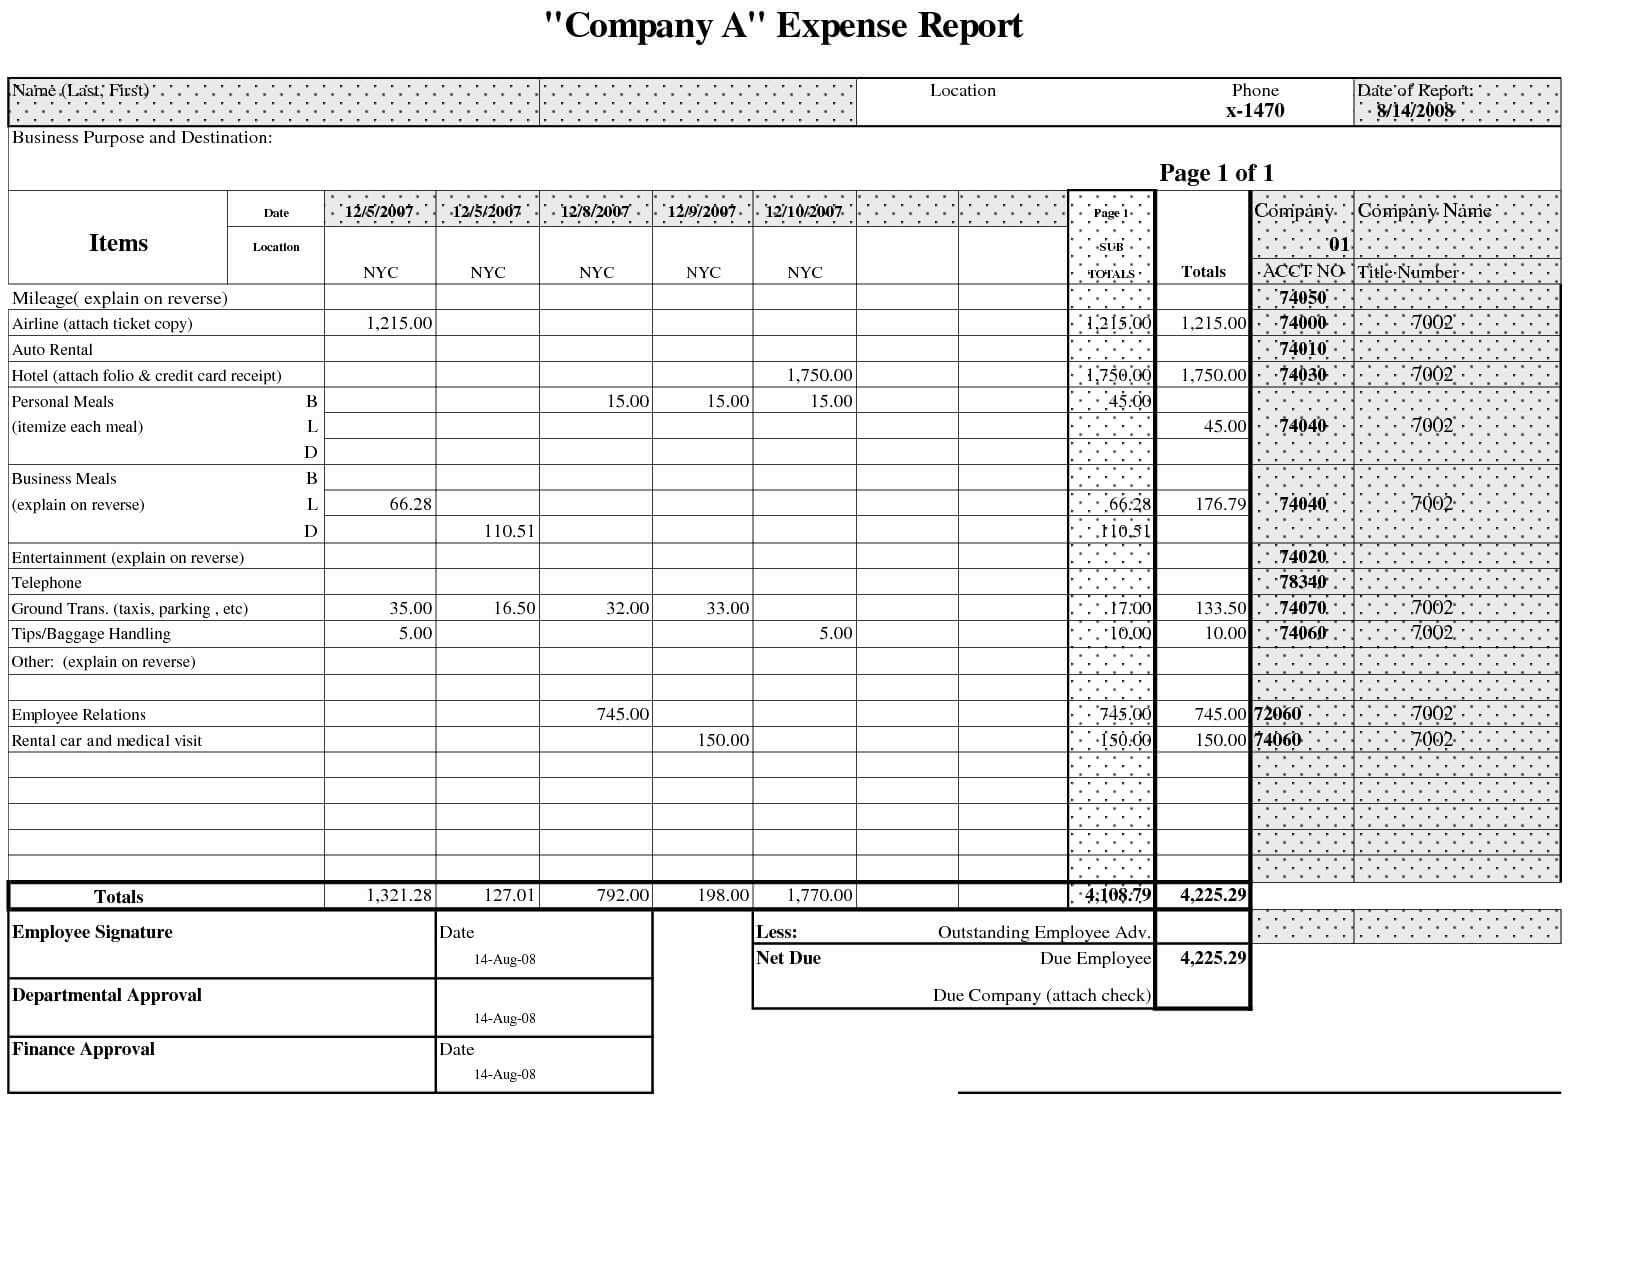 Gas Mileage Spreadsheet Of Annual Expense Report Template Or In Gas Mileage Expense Report Template